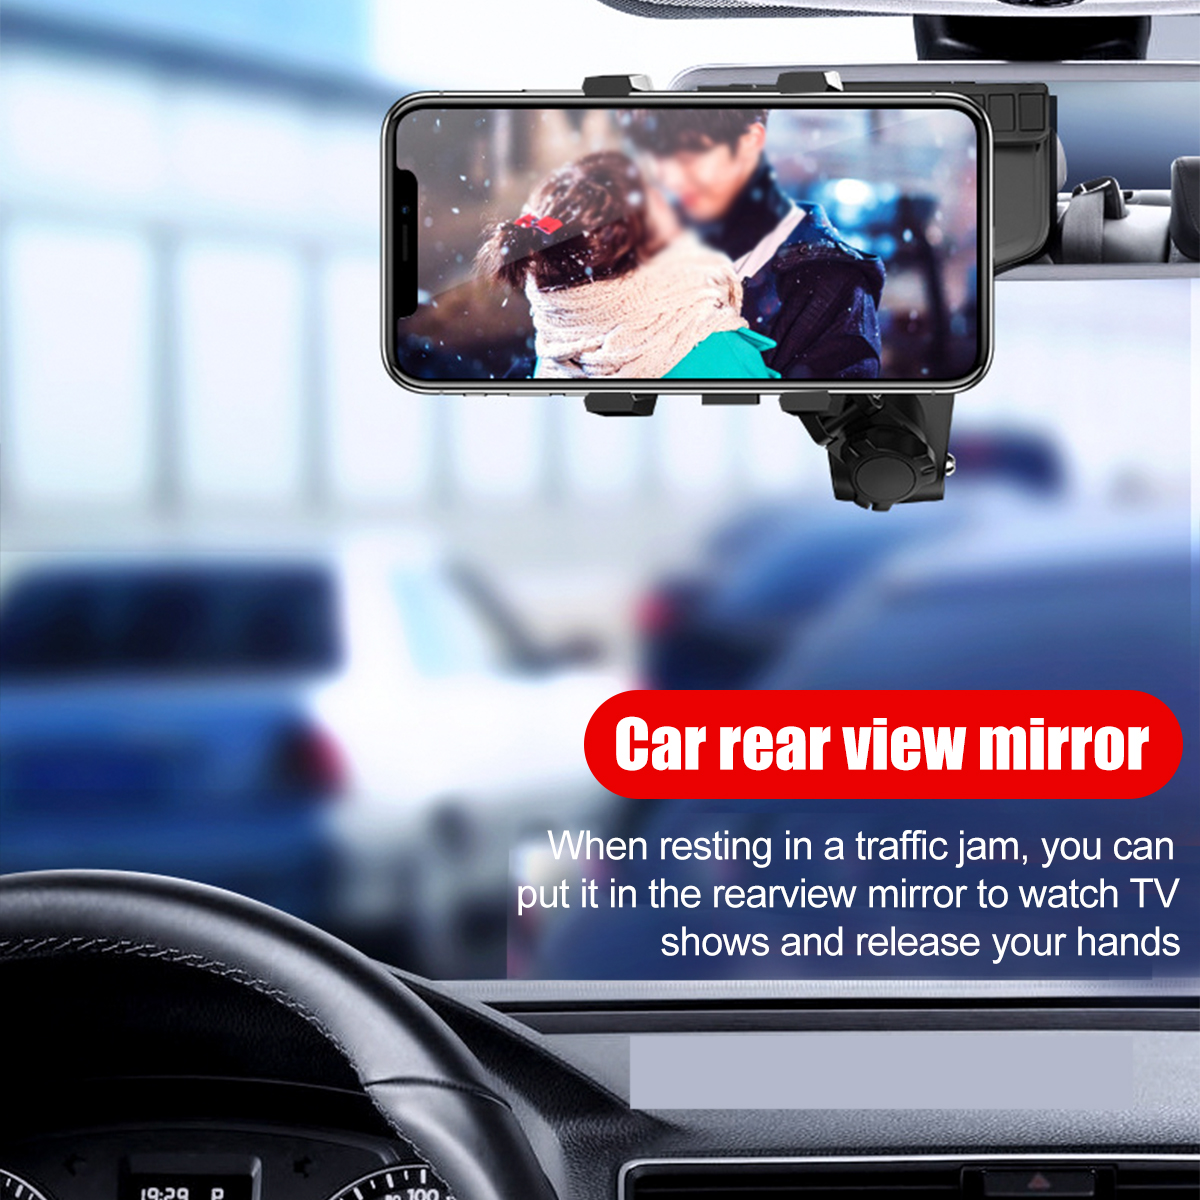 360°Rotation Car Mobile Phone Holder Car Sun Visor Dashboard Mobile Phone Holder